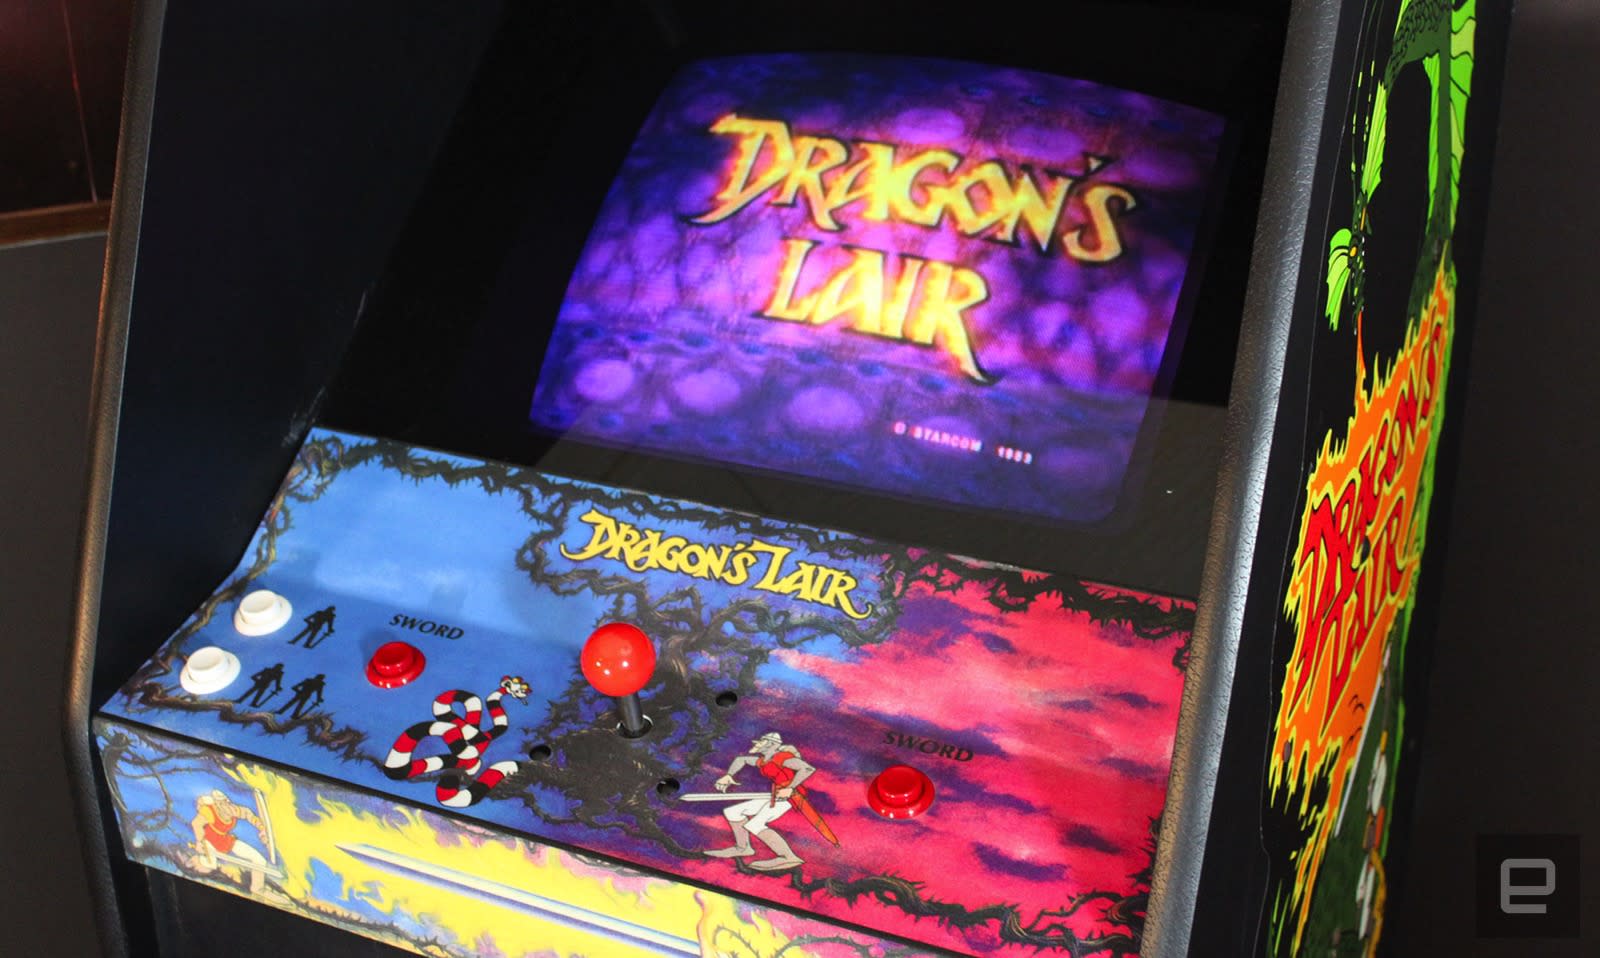 dragon lair arcade game